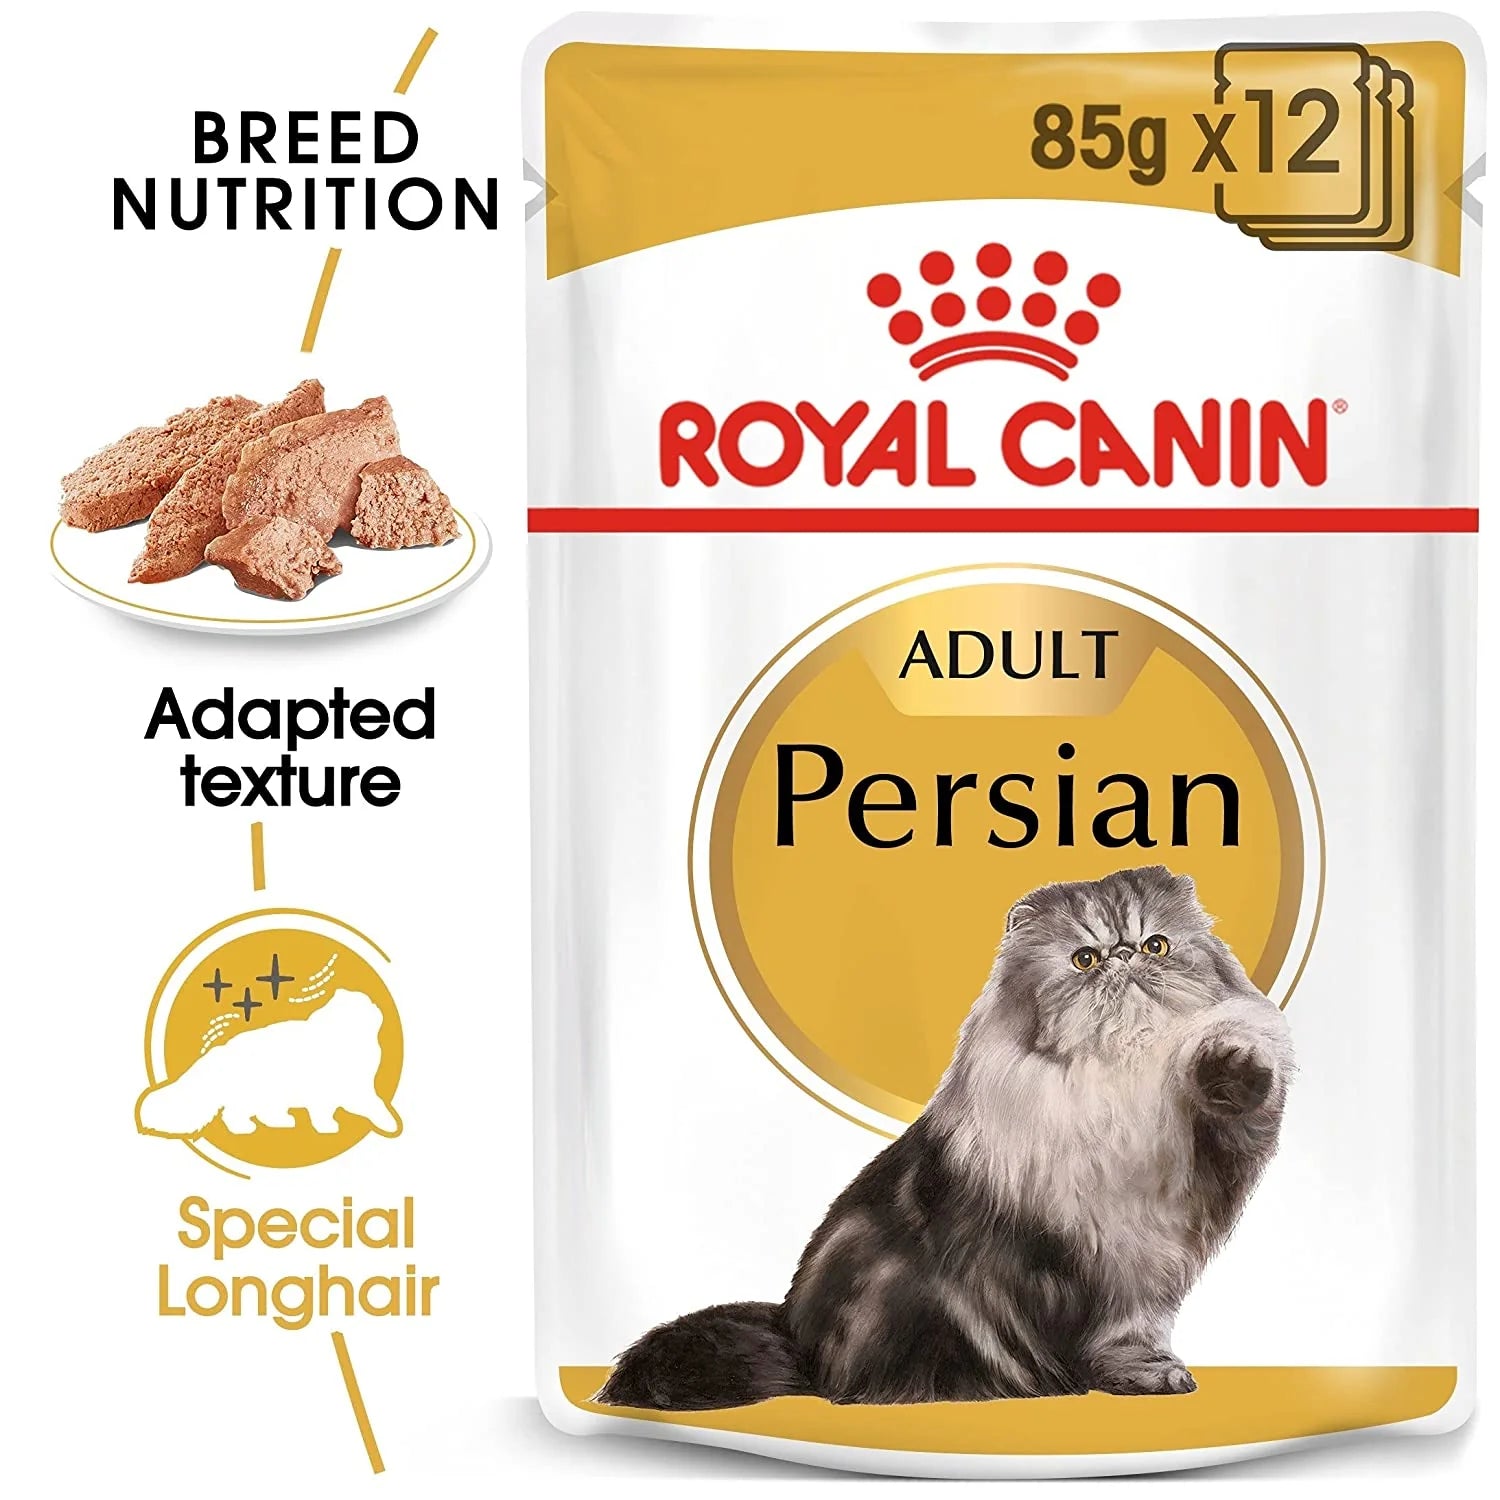 Royal Canin Persian Cat Food Pack of 12 (85 gm)